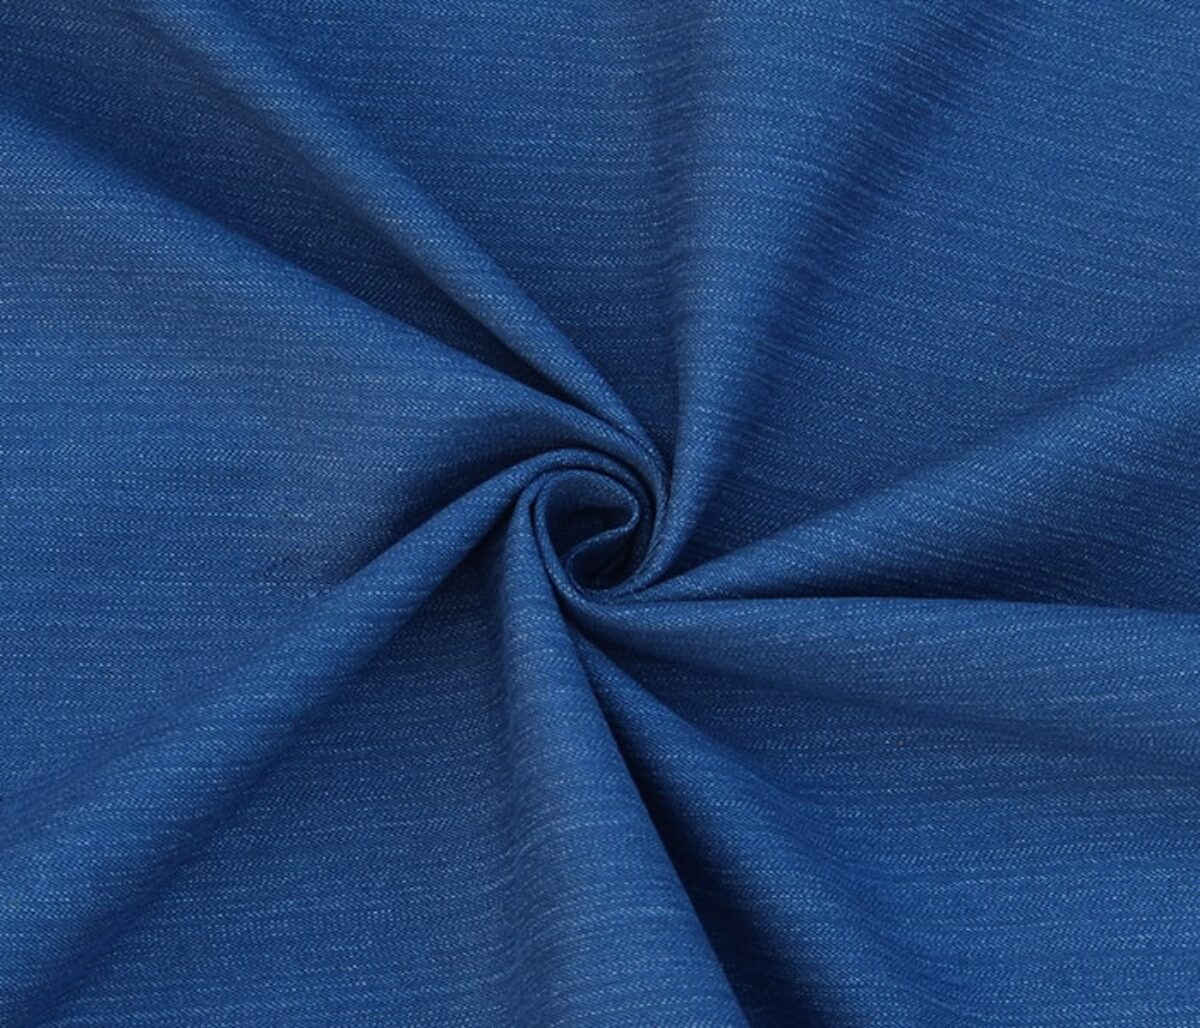 Royal Blue Plain Solid Canvas Denim Twill Upholstery Fabric by the Yard  K3362 - KOVI Fabrics